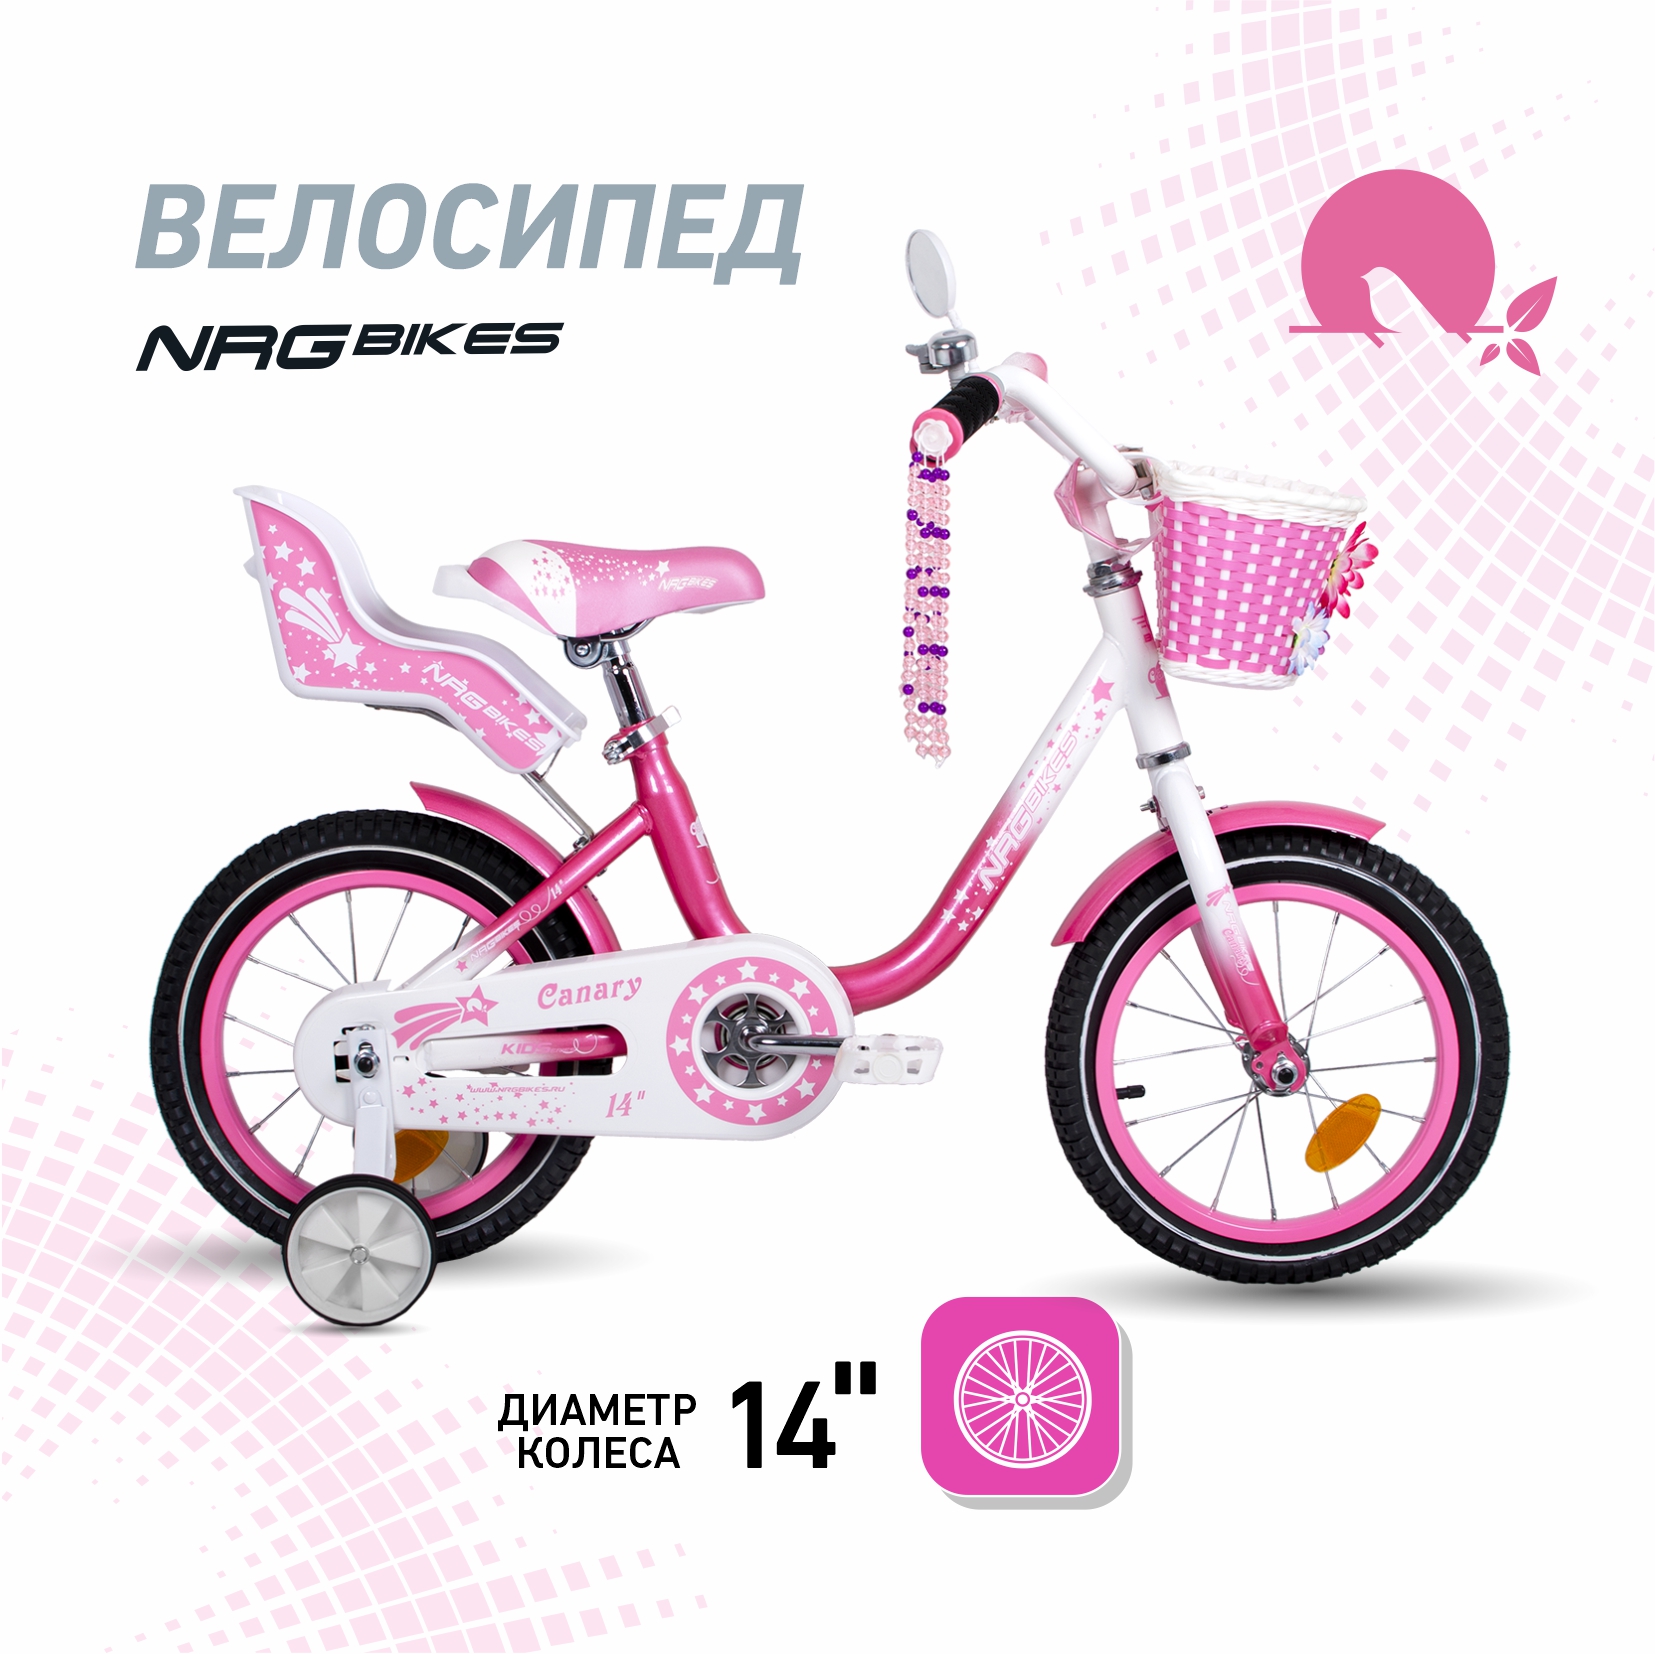 Велосипед NRG BIKES CANARY 14 pink-white - фото 1